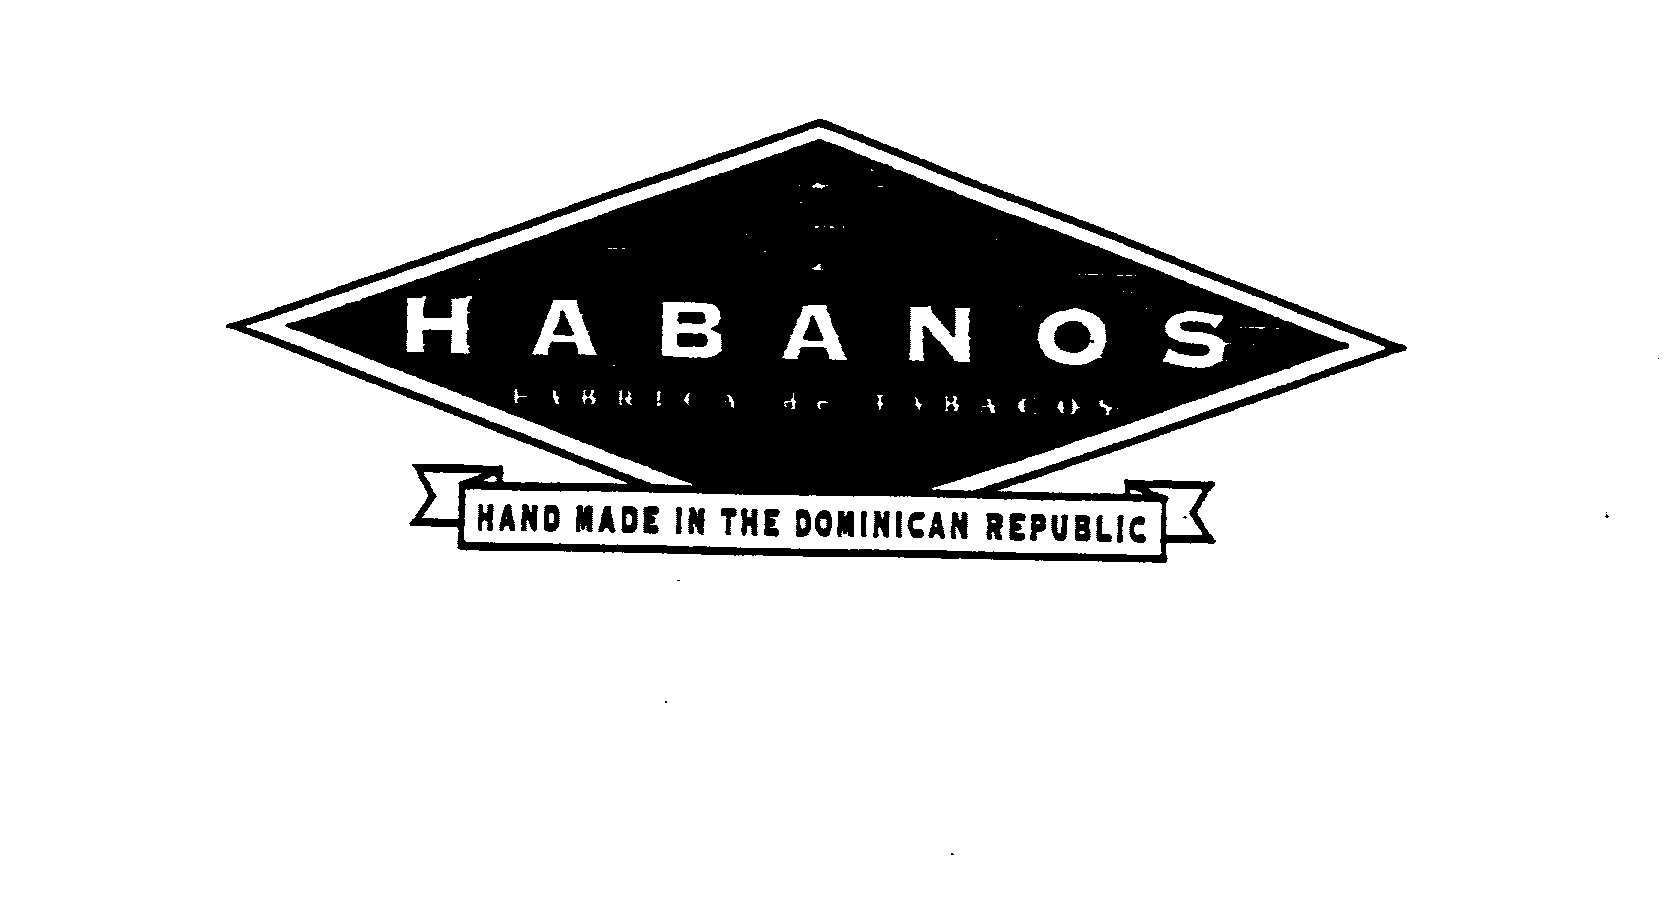  HABANOS FABRICA DE TABACOS HAND MADE IN THE DOMINICAN REPUBLIC